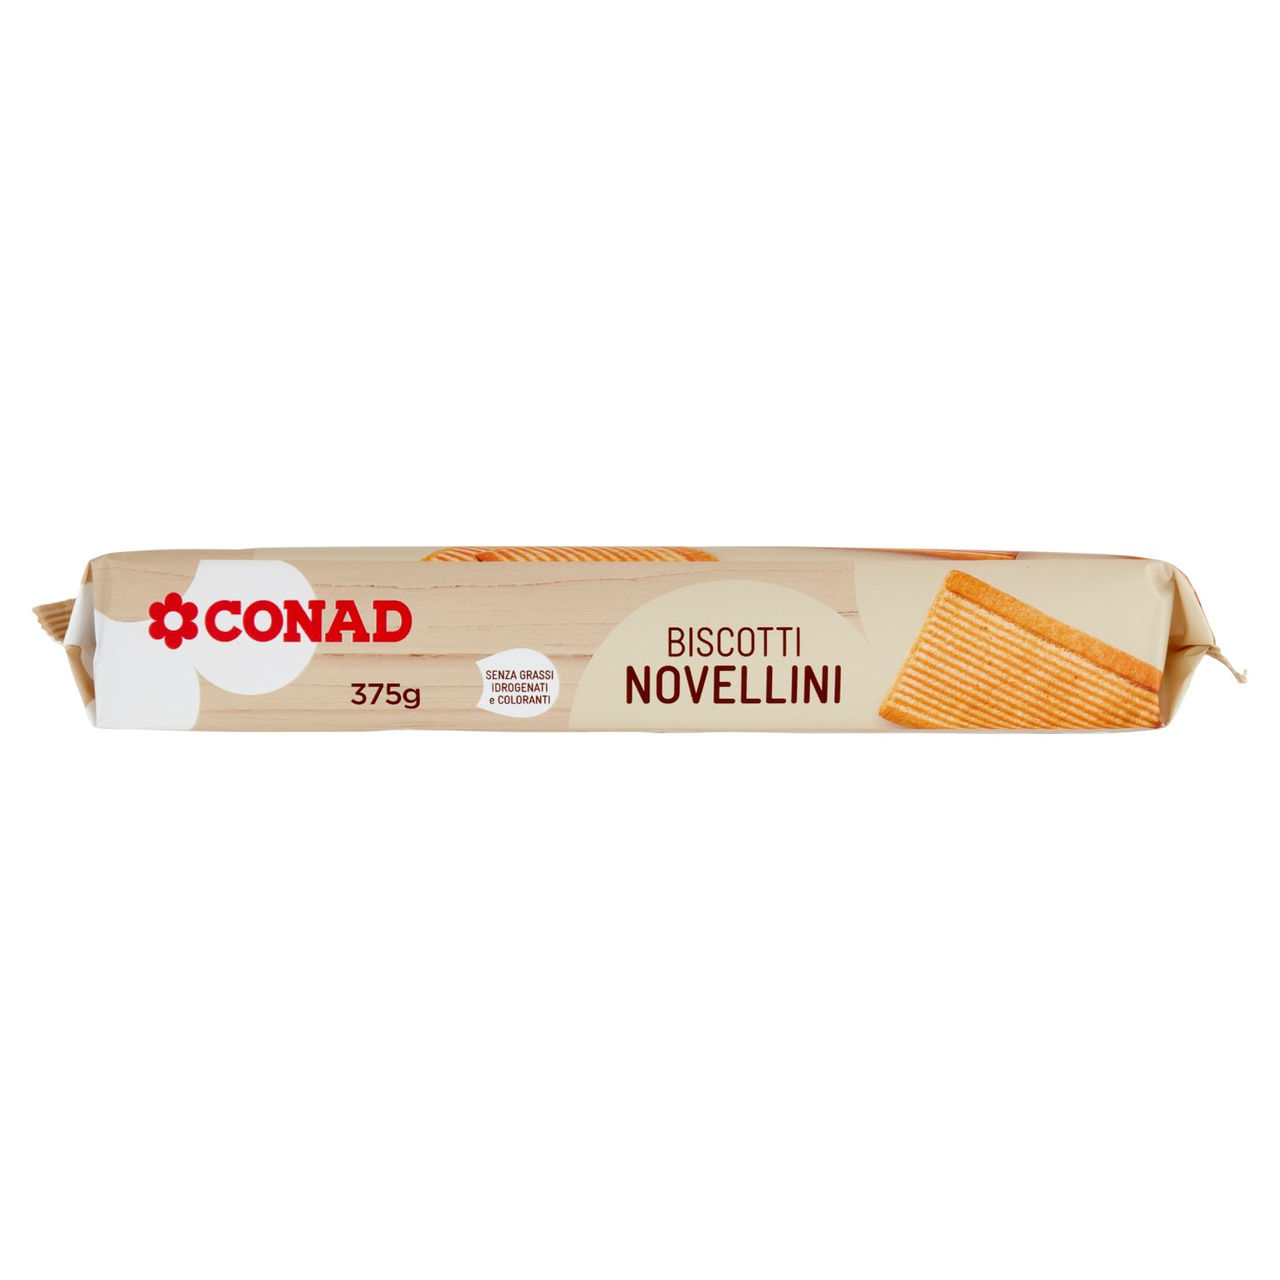 Biscotti Novellini g. 375 Conad online